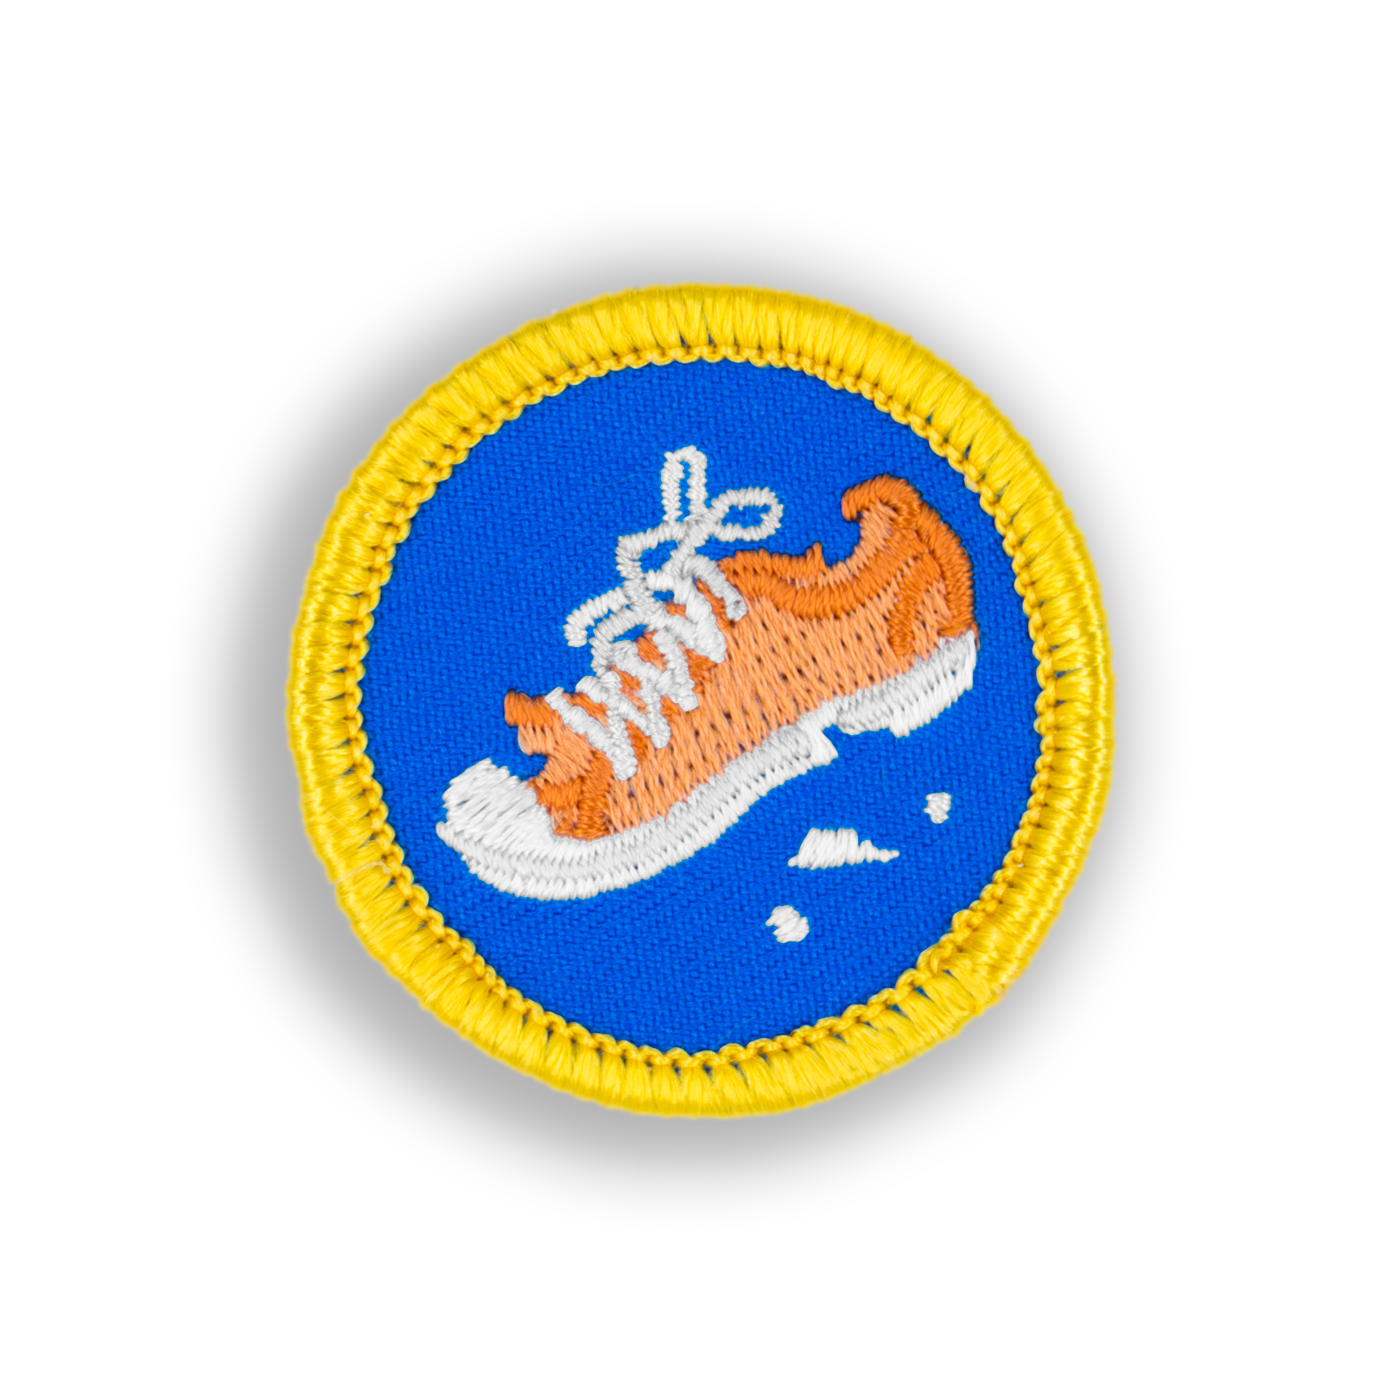 Chewed Sneaker Patch | Demerit Wear - Fake Merit Badges